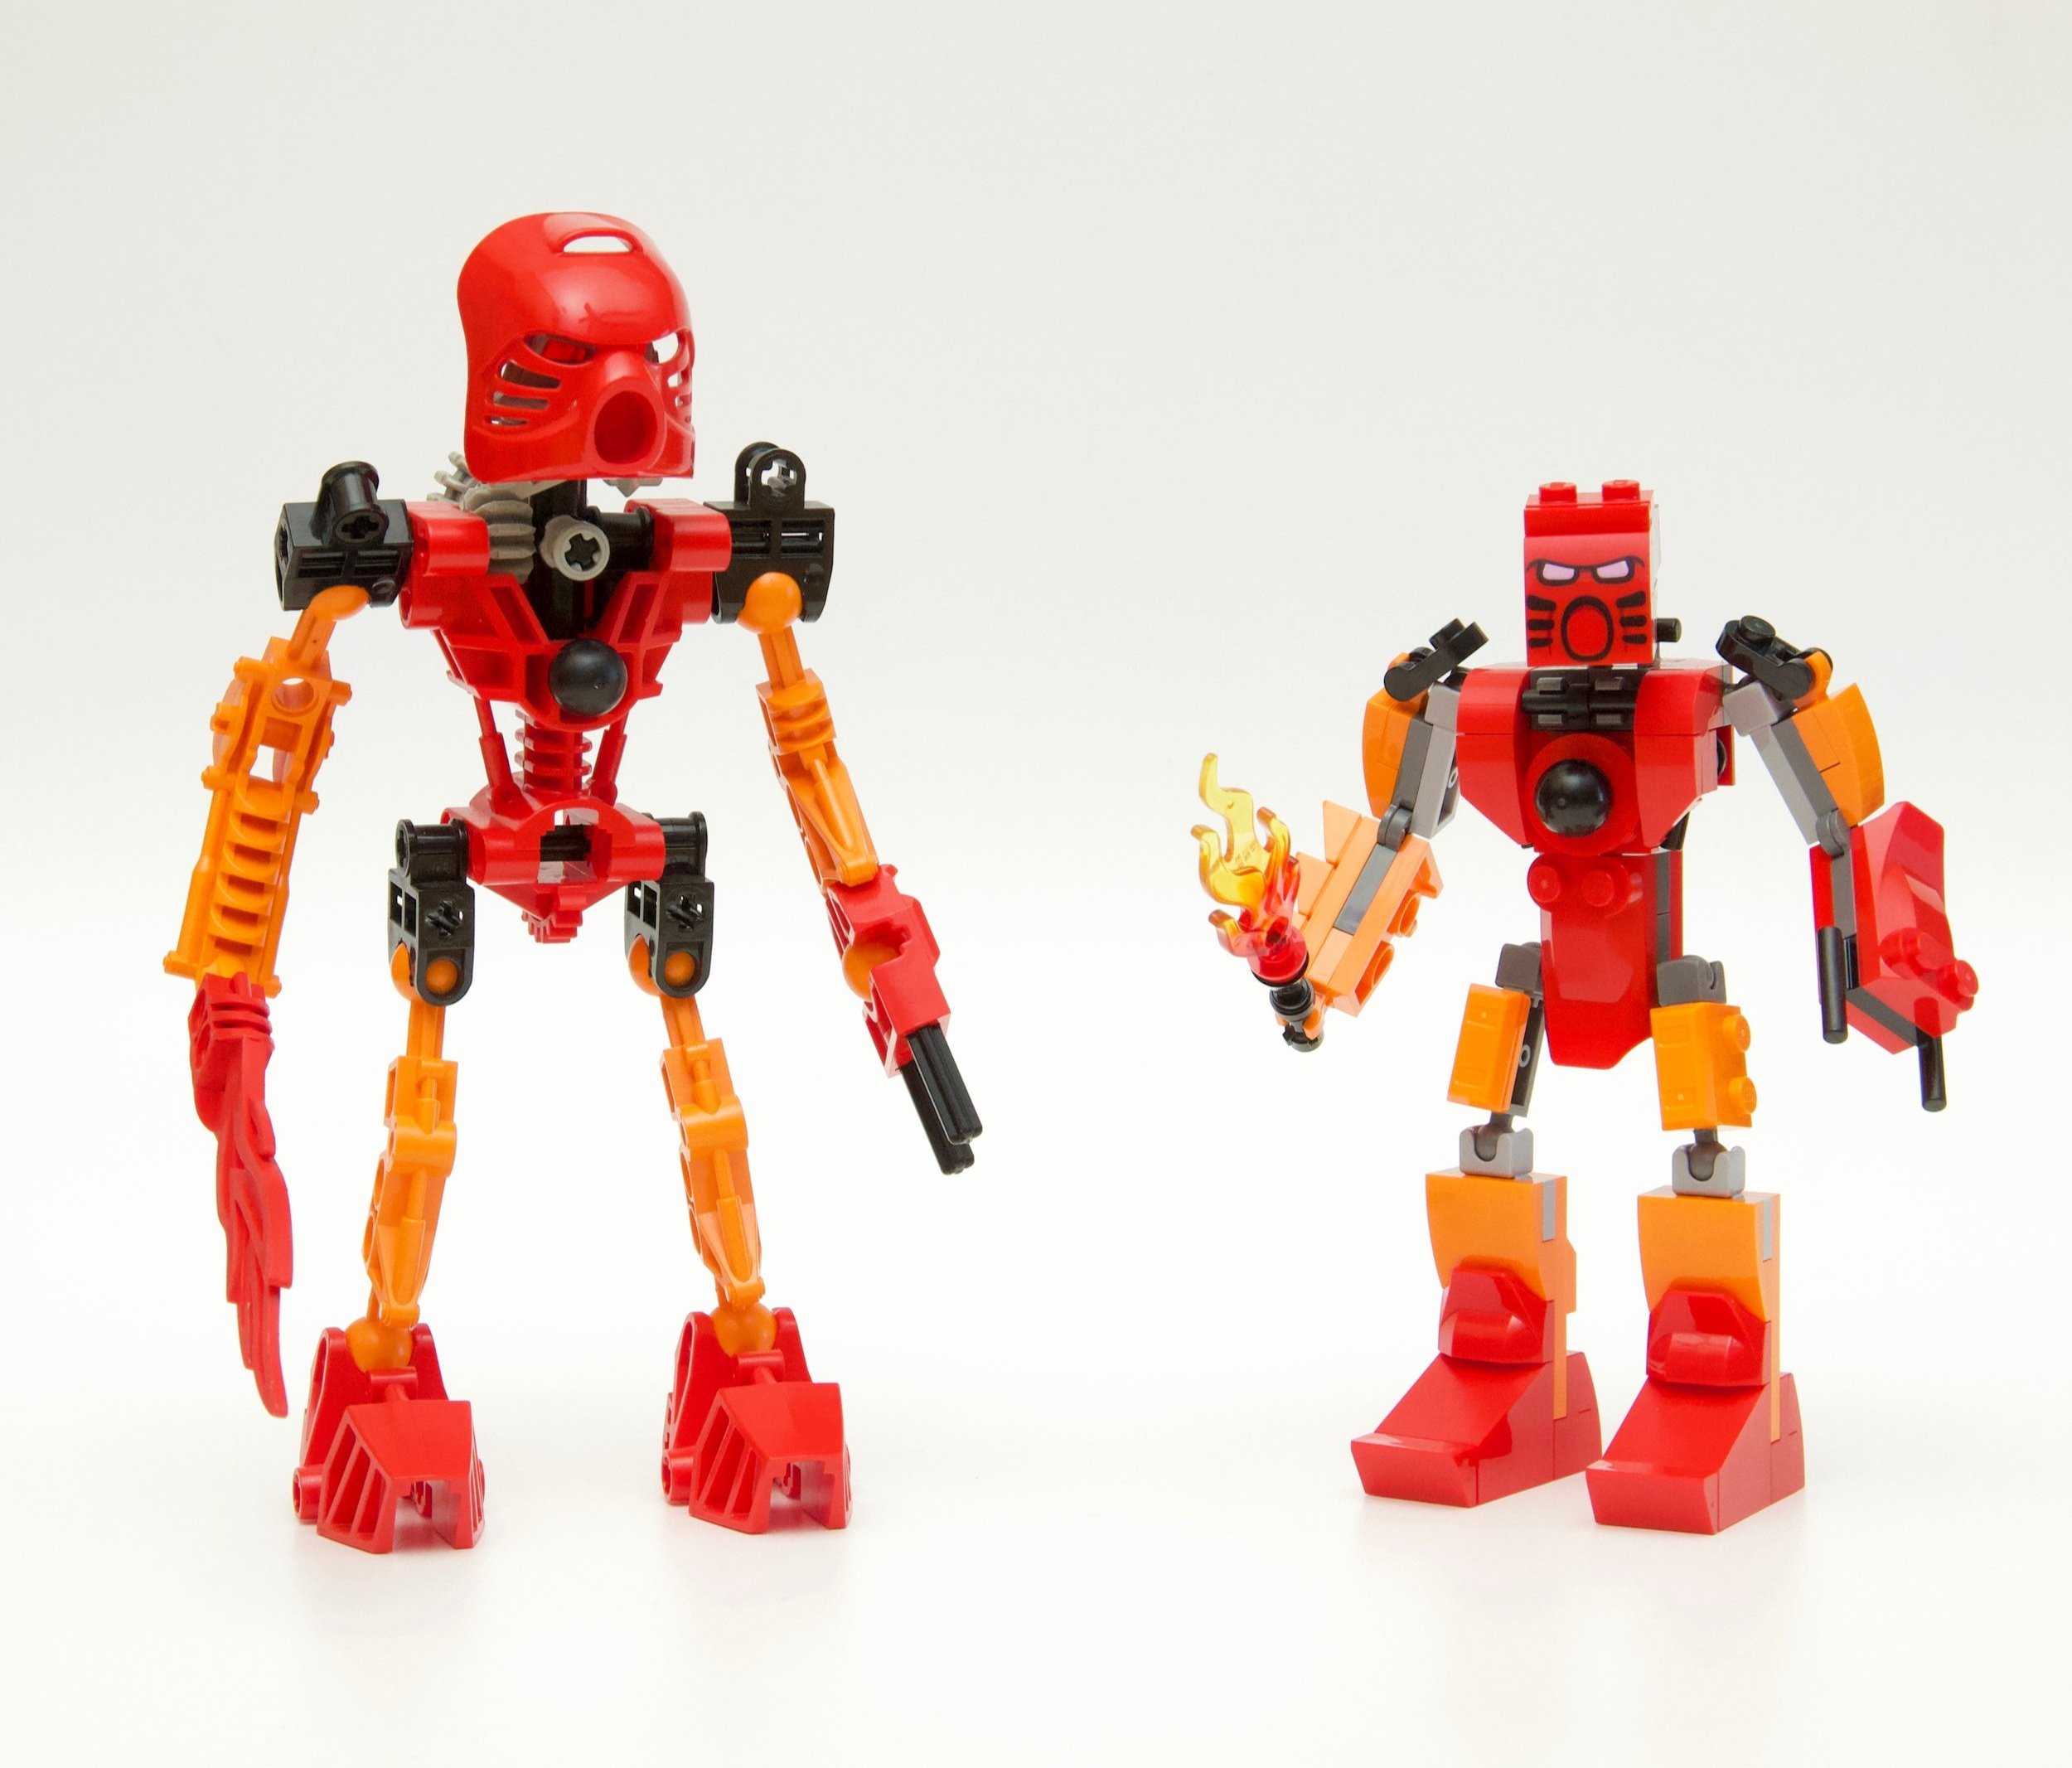 Sociale Studier metodologi Bølle Bionicle is Back: A LEGO Legacy Hidden in Plain Sight - BrickNerd - All  things LEGO and the LEGO fan community